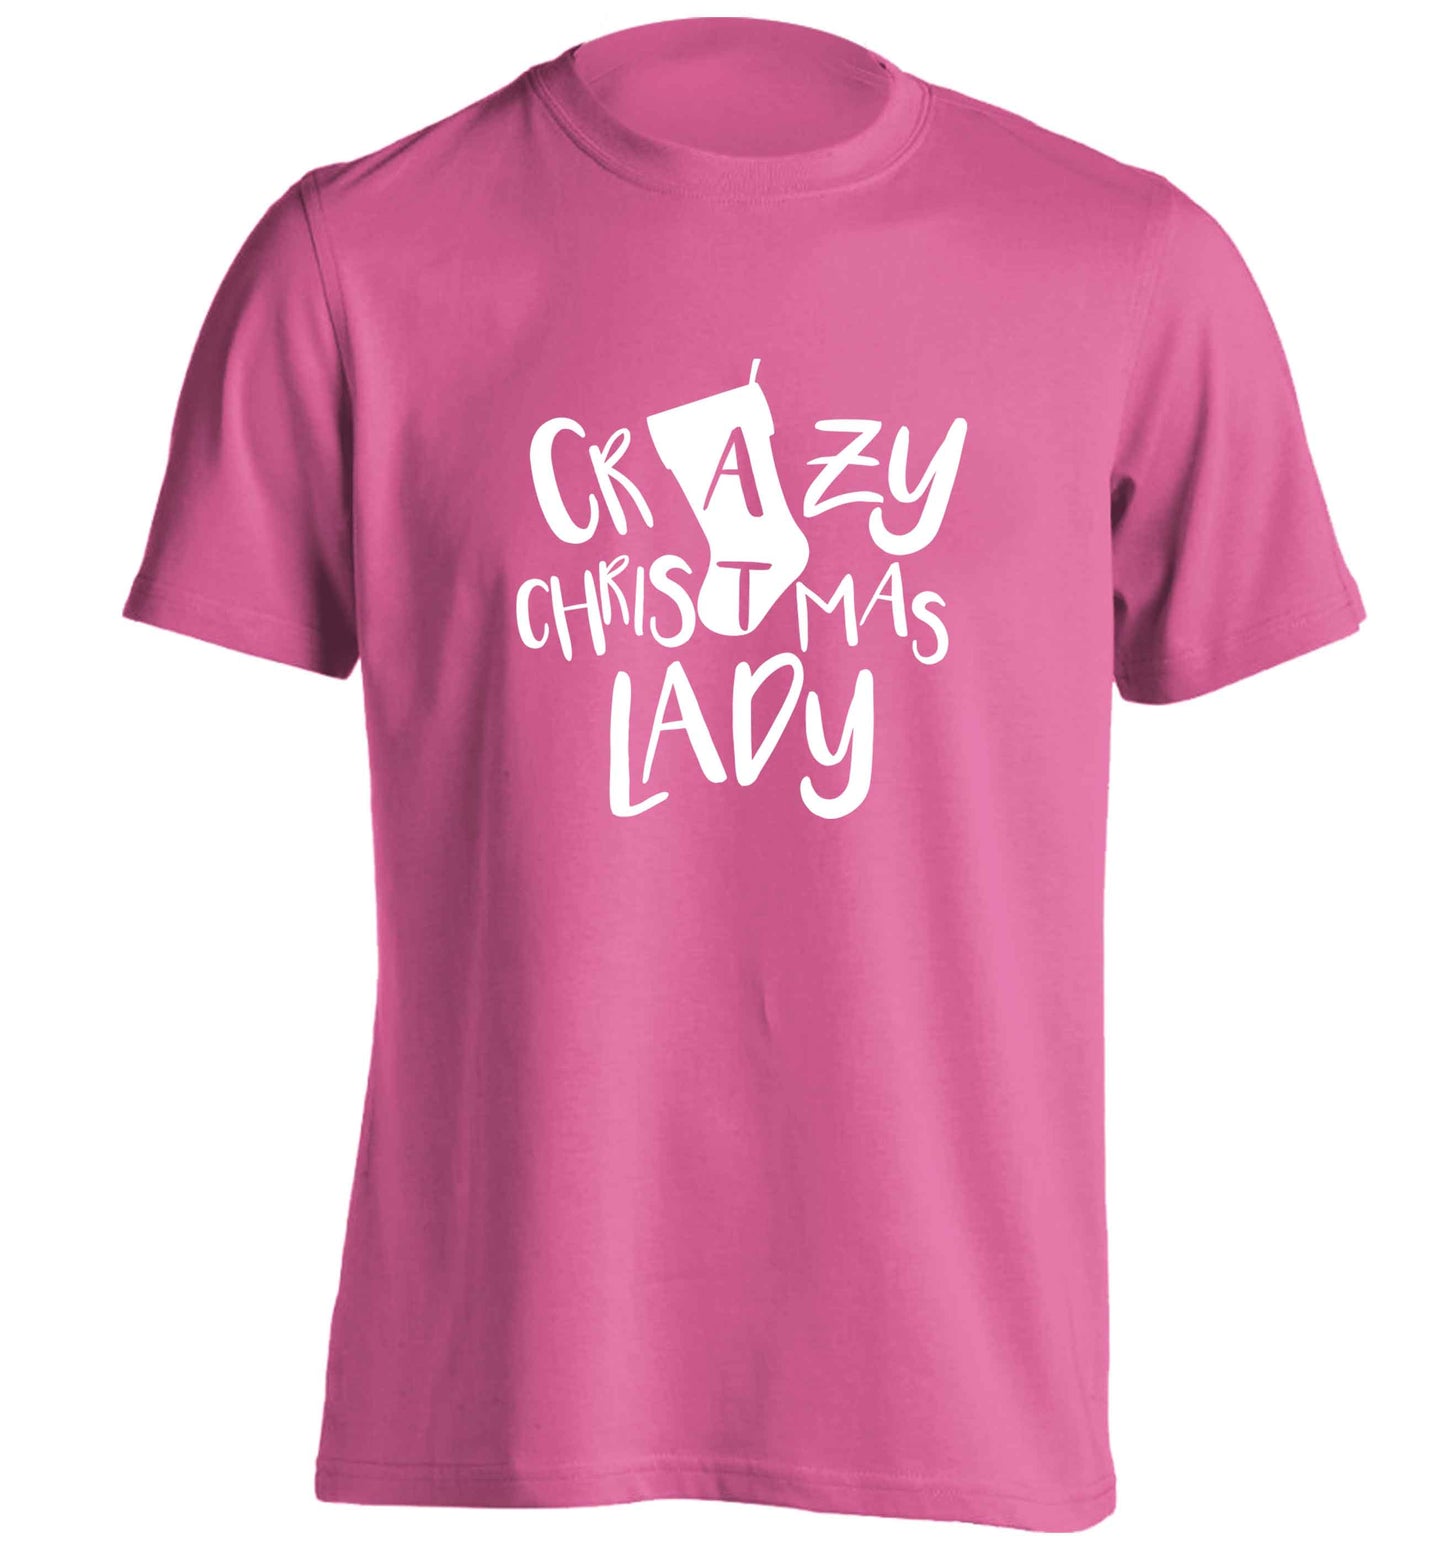 Crazy Christmas Dude adults unisex pink Tshirt 2XL